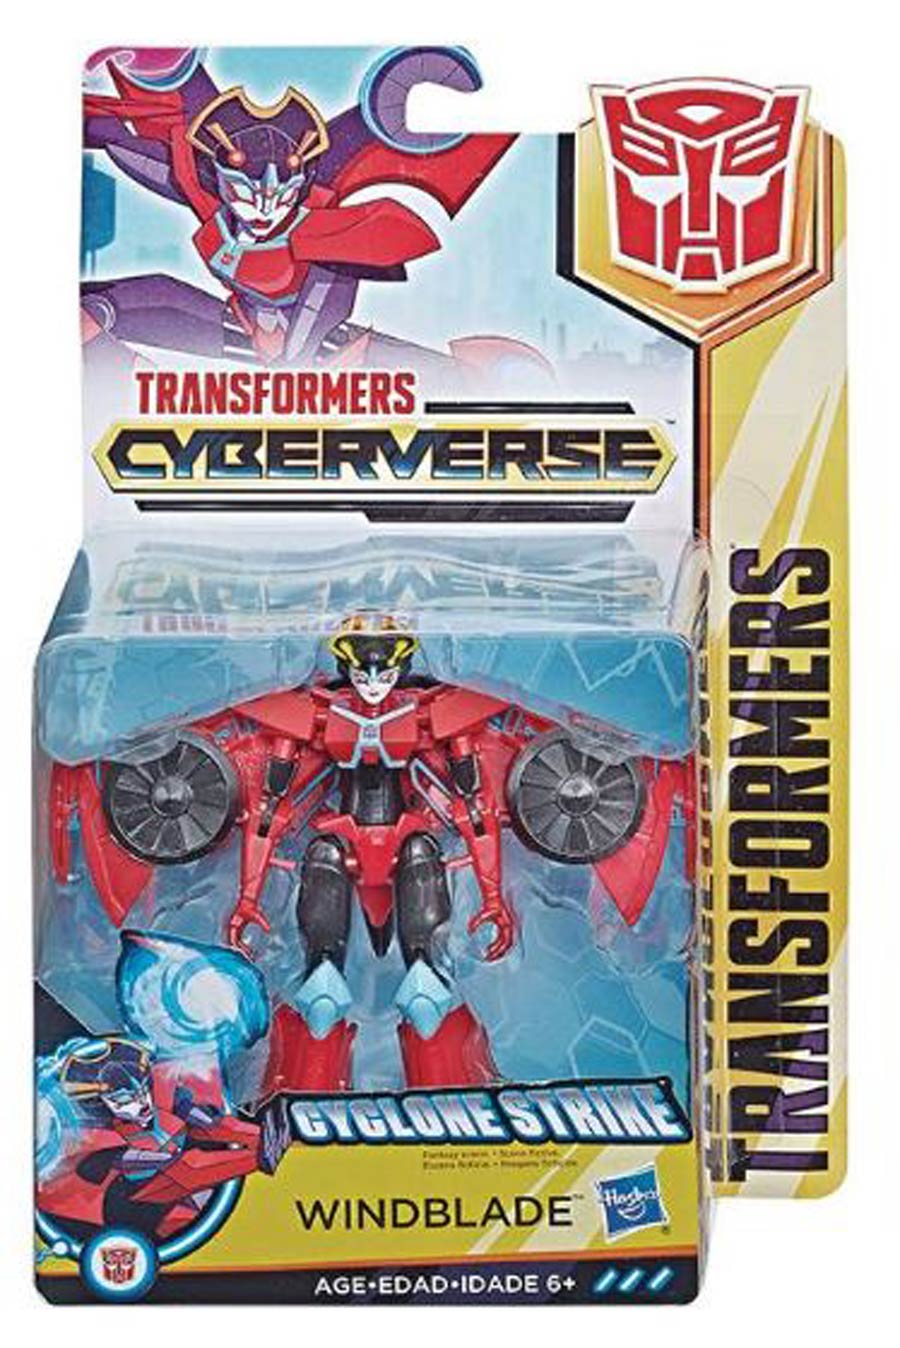 Transformers Cyberverse Warrior Action Figure Assortment 201901 - Windblade